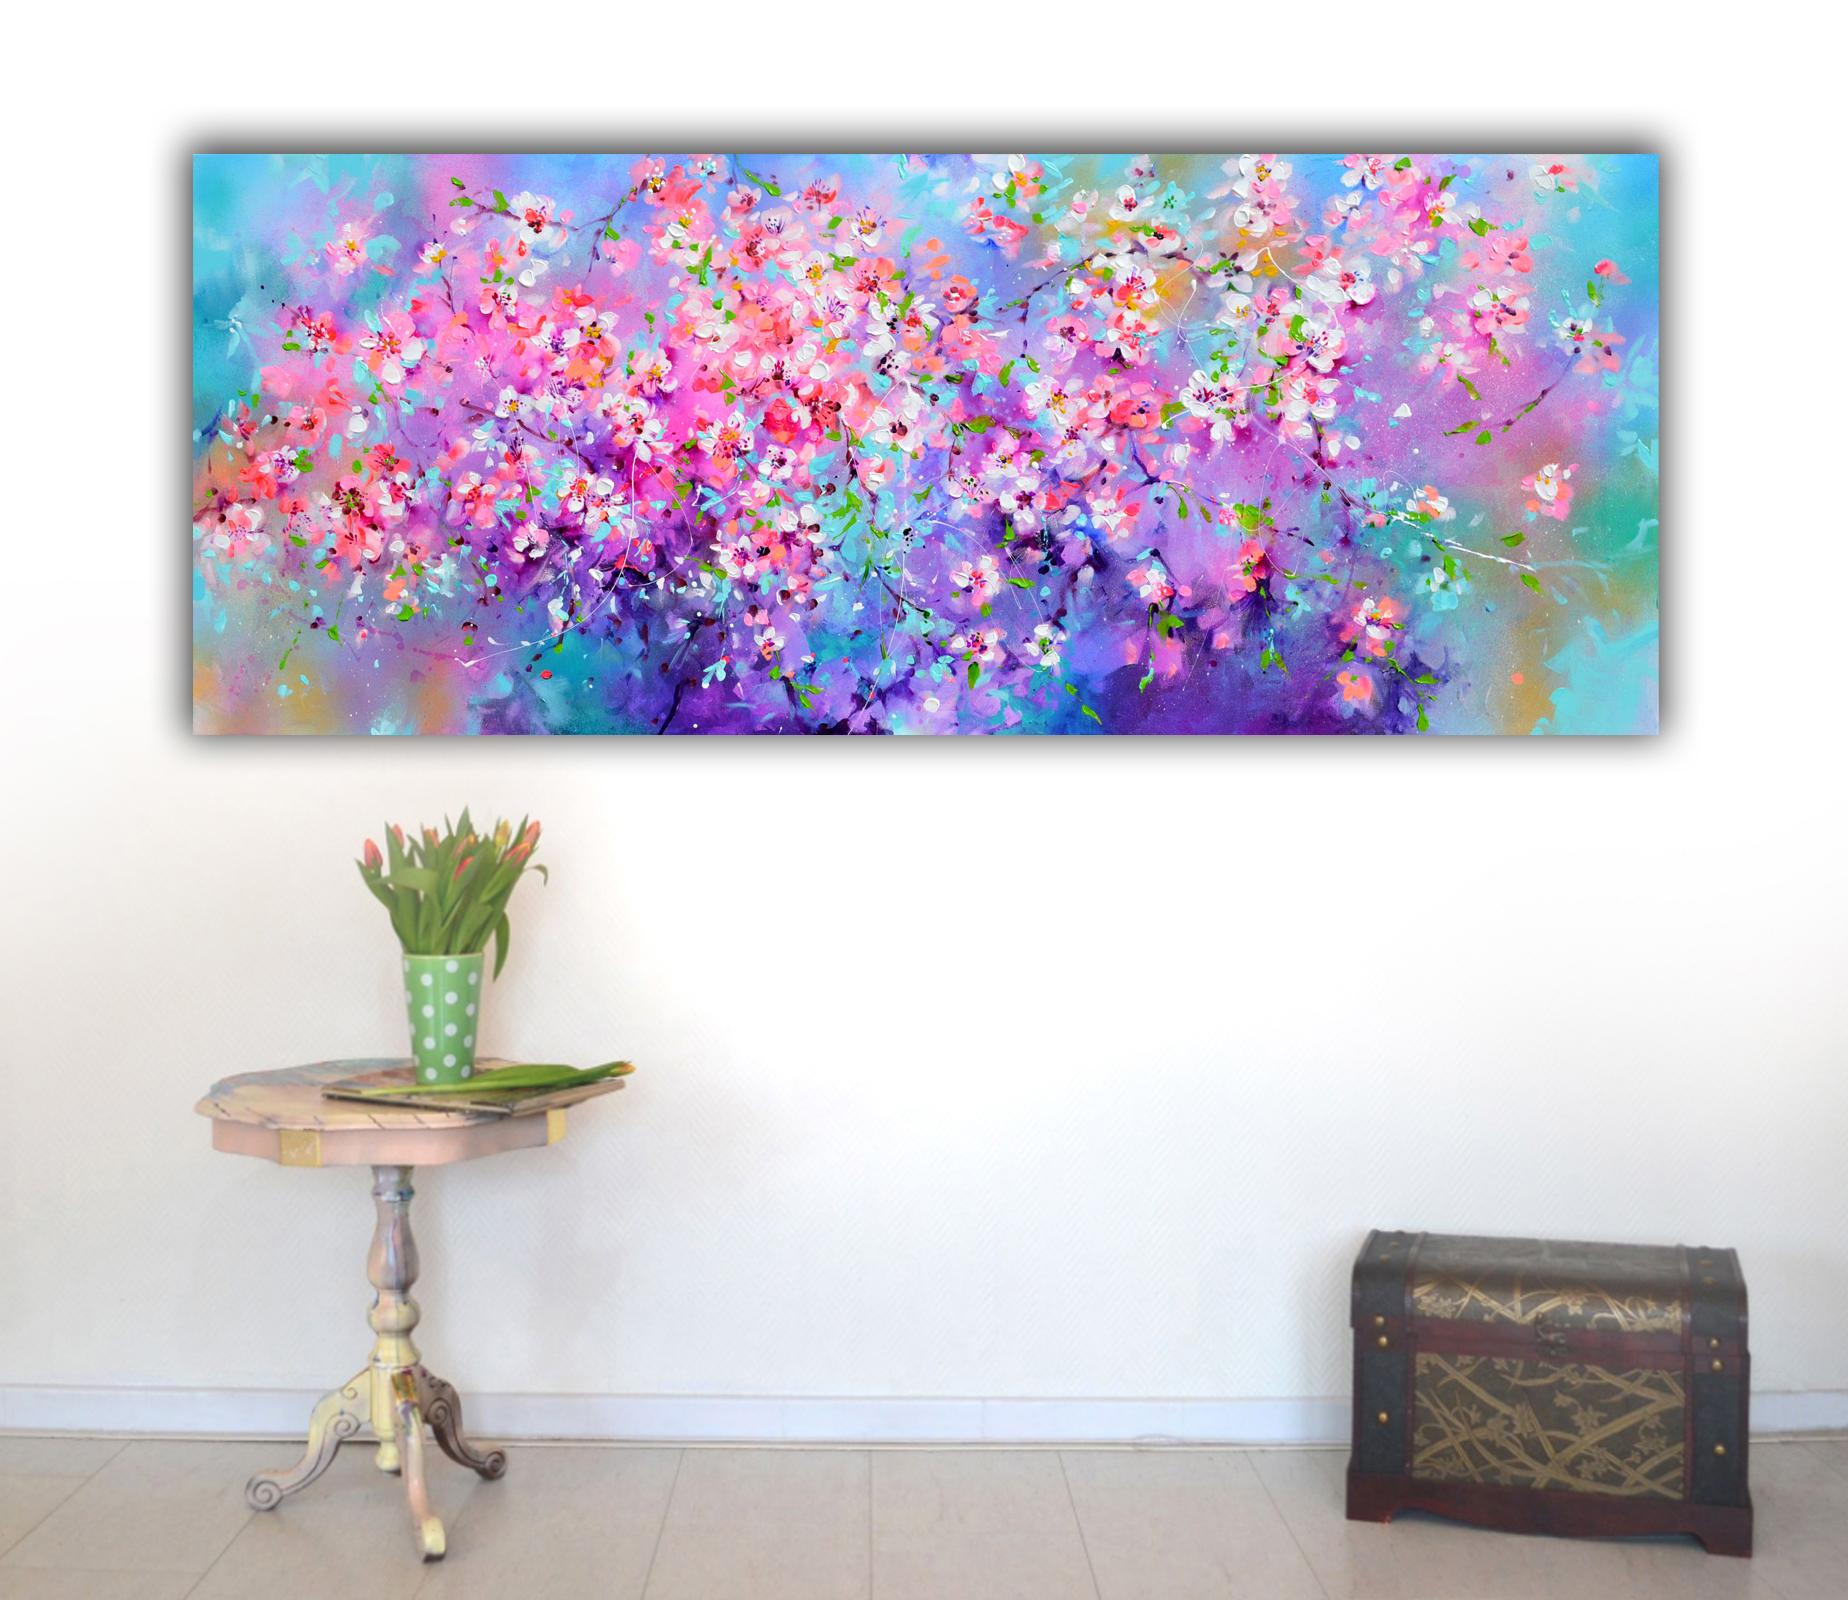 I've Dreamed 55 - Sakura Colorful Blossom - 150x60 cm, Palette Knife Modern Art - Painting by Soos Roxana Gabriela